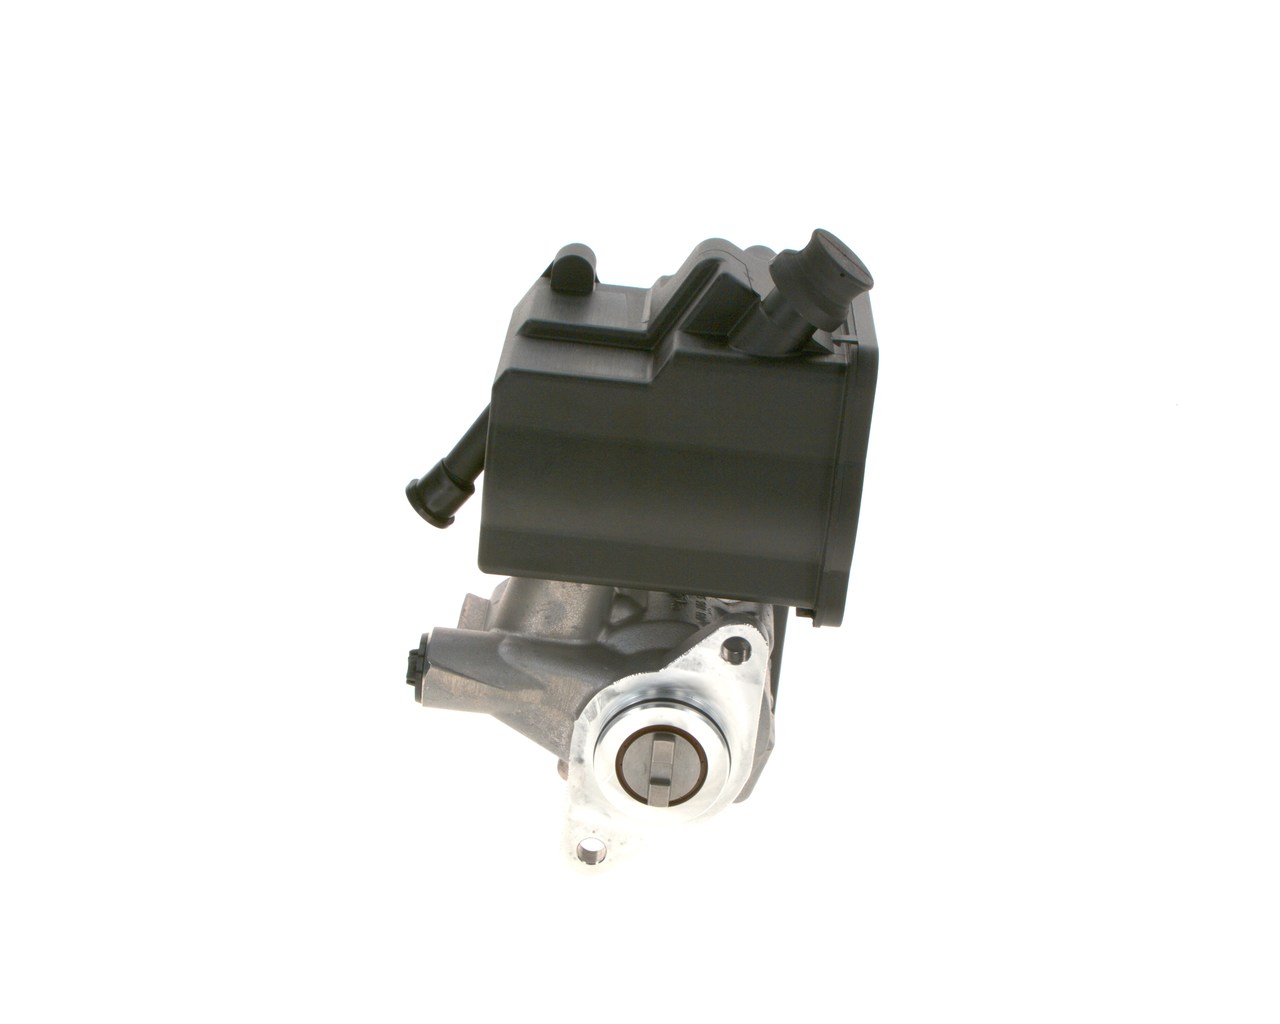 BOSCH K S00 000 401 Power steering pump Hydraulic, 200 bar, M 16 x 1,5, Vane Pump, Anticlockwise rotation